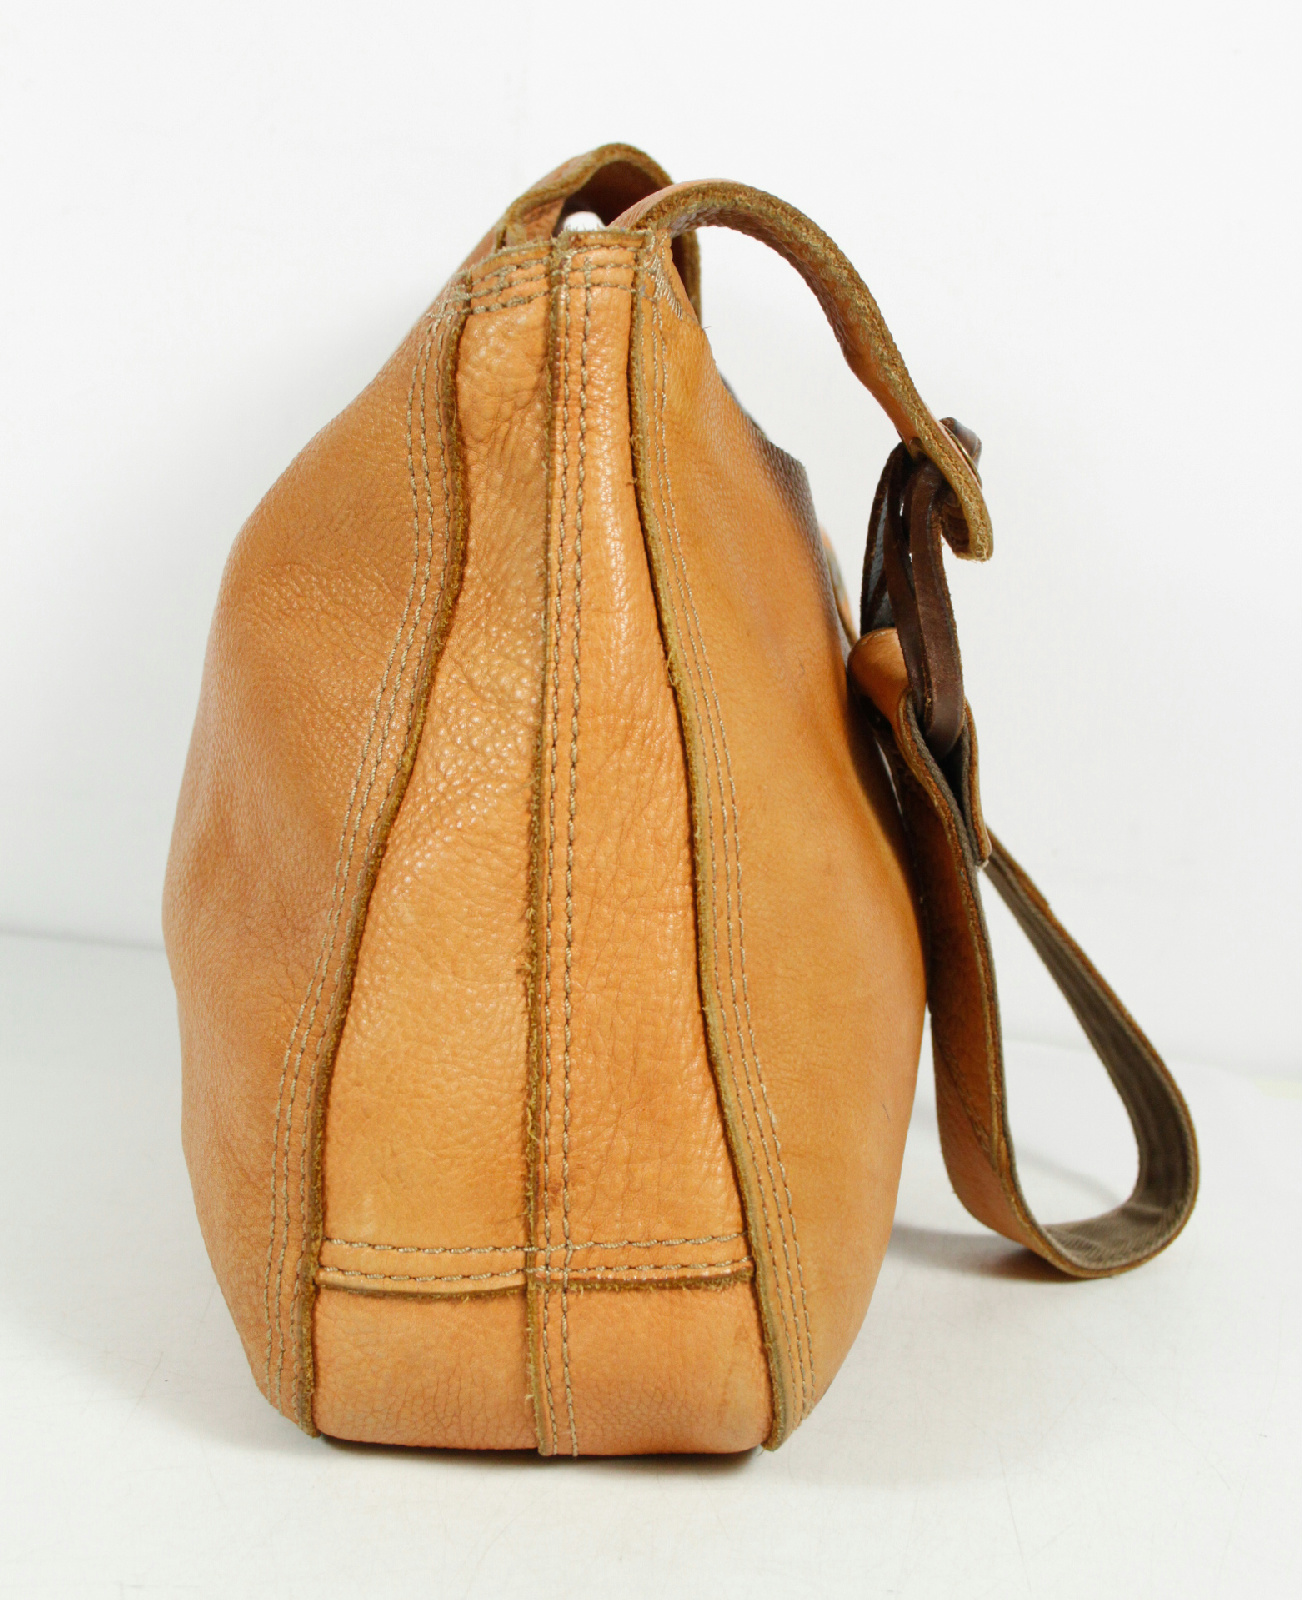 Lucky Brand Brown Vintage Inspired Leather Pebble Hobo Shoulder Bag | eBay